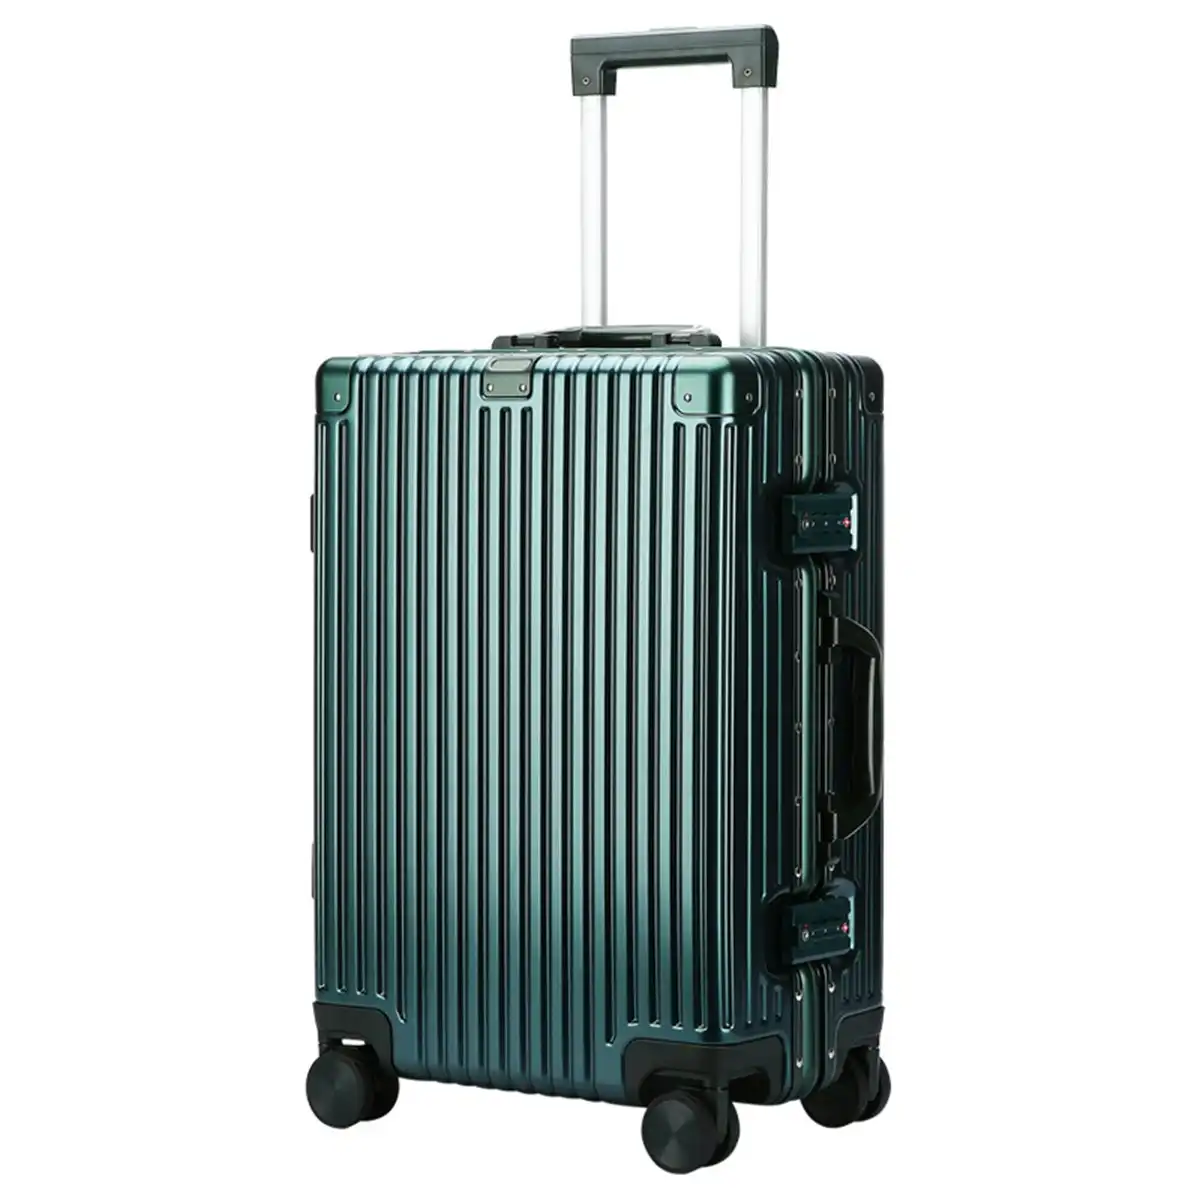 Bopai Aluminium Luggage Suitcase Lightweight With TSA Locker 8 Wheels Check In Large Hardcase B3243 Green